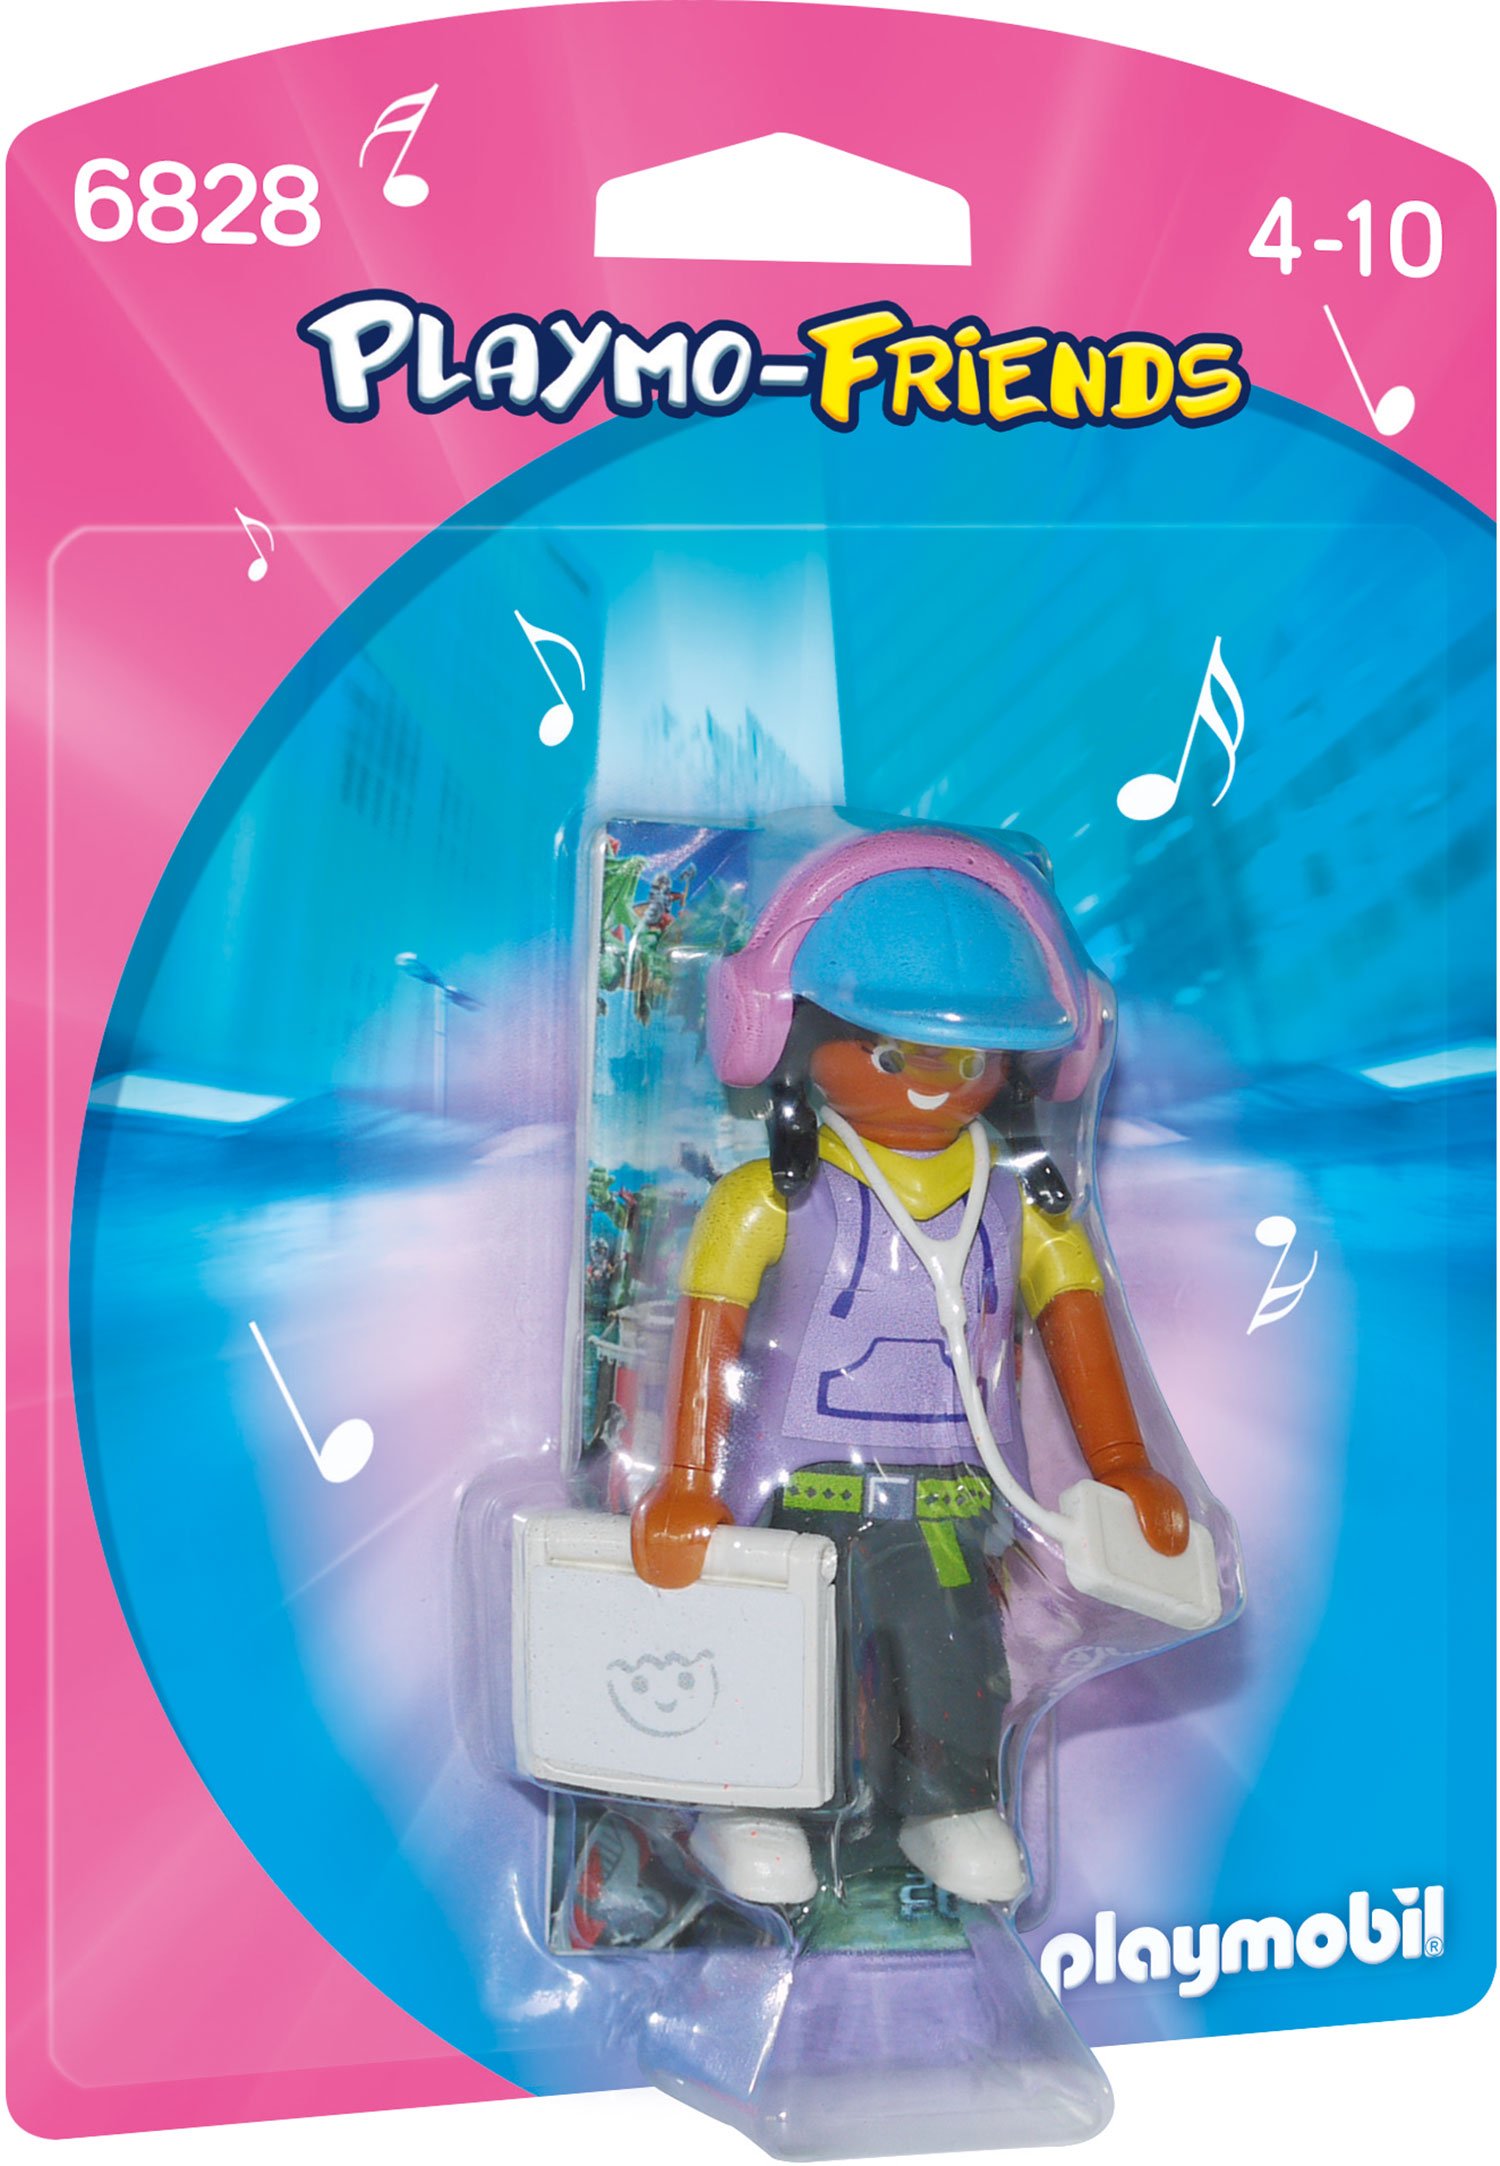 Playmobil Playmo Friends Tech Guru Figure